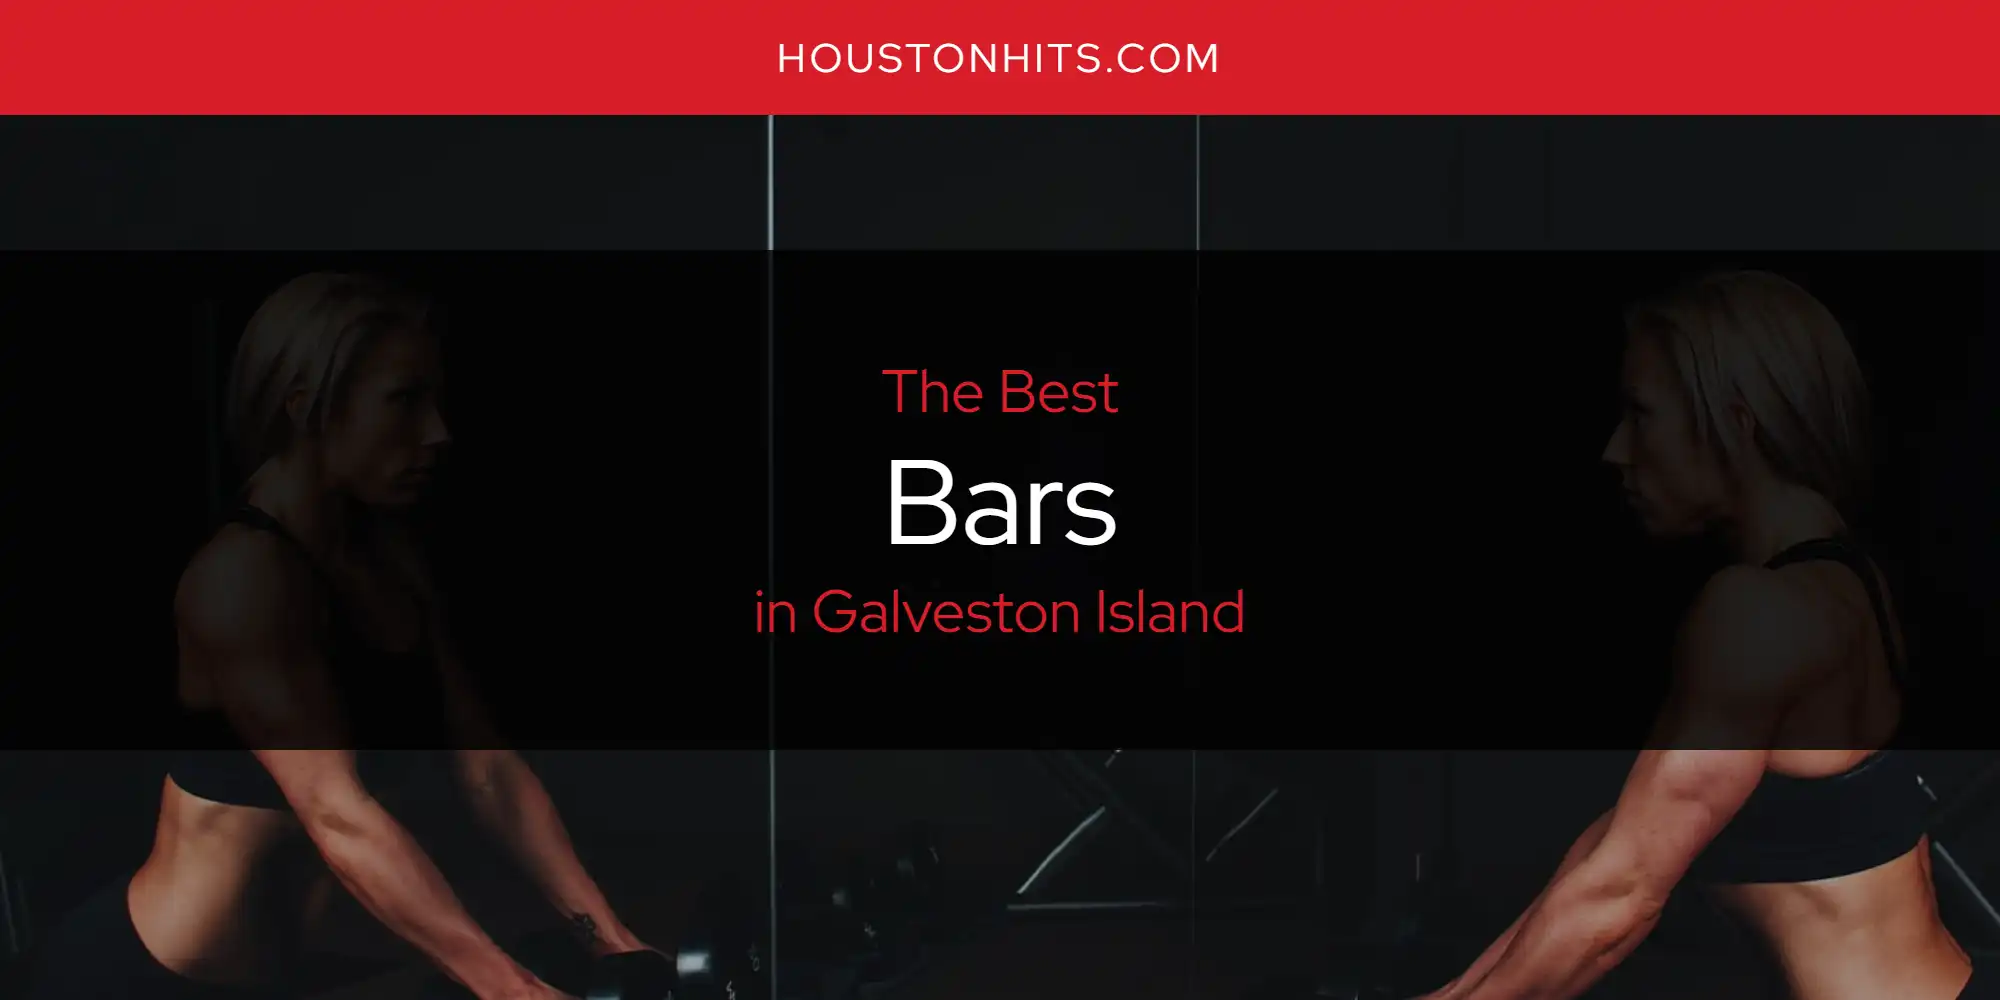 Galveston island bars clubs bar contemporary beach great beverage spirits wine night life